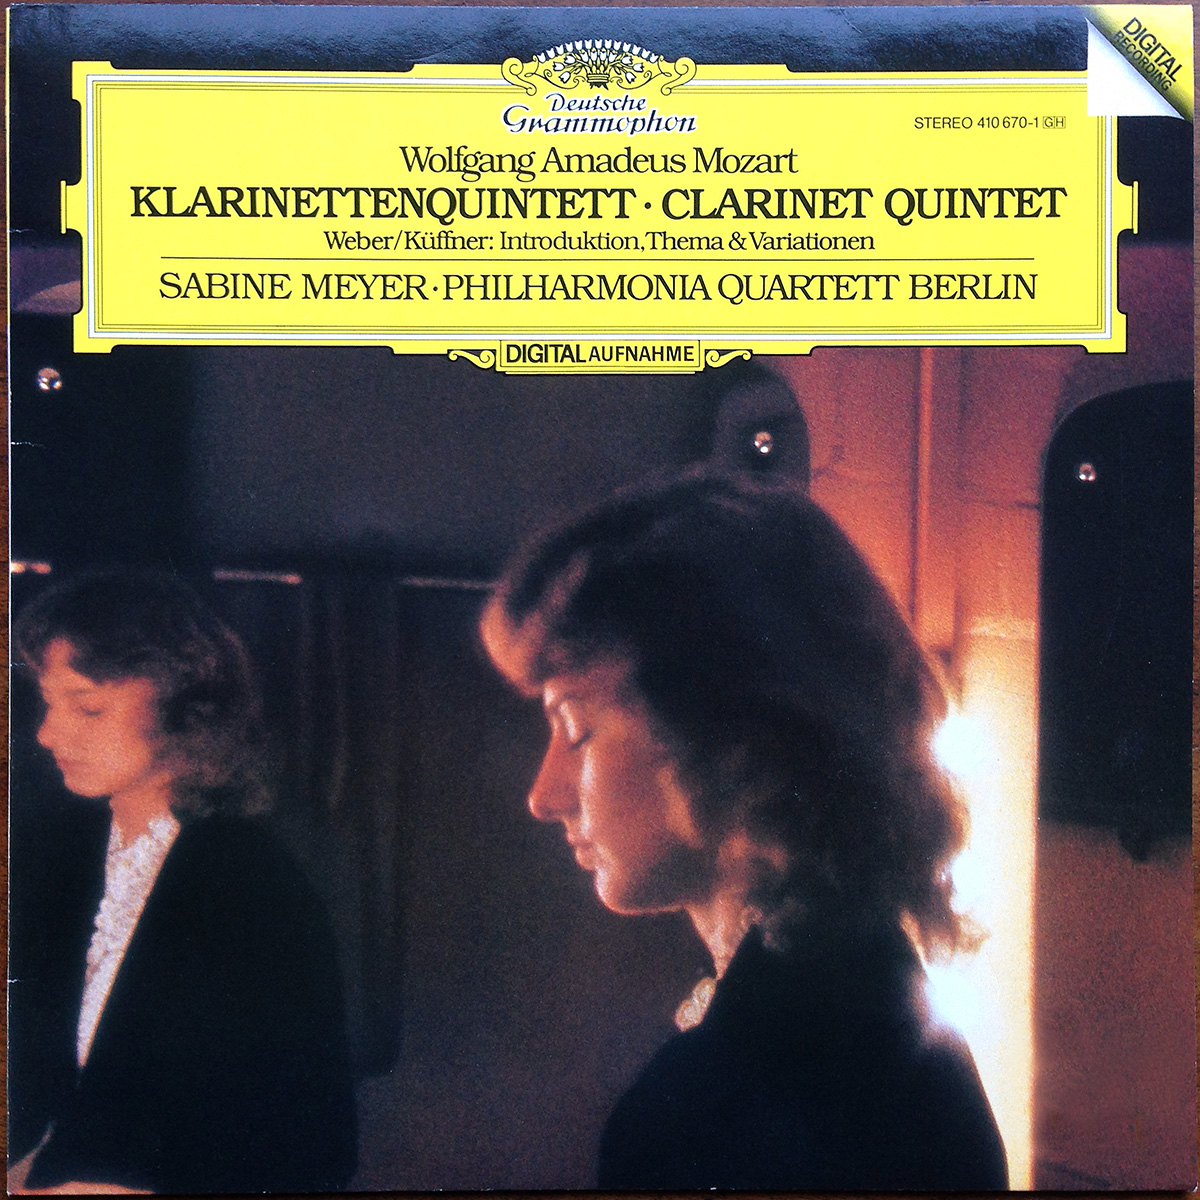 DGG 410 670 Mozart Clarinet Quintet Sabine Meyer Philhamonia Quartett Berlin DGG Digital Aufnahme